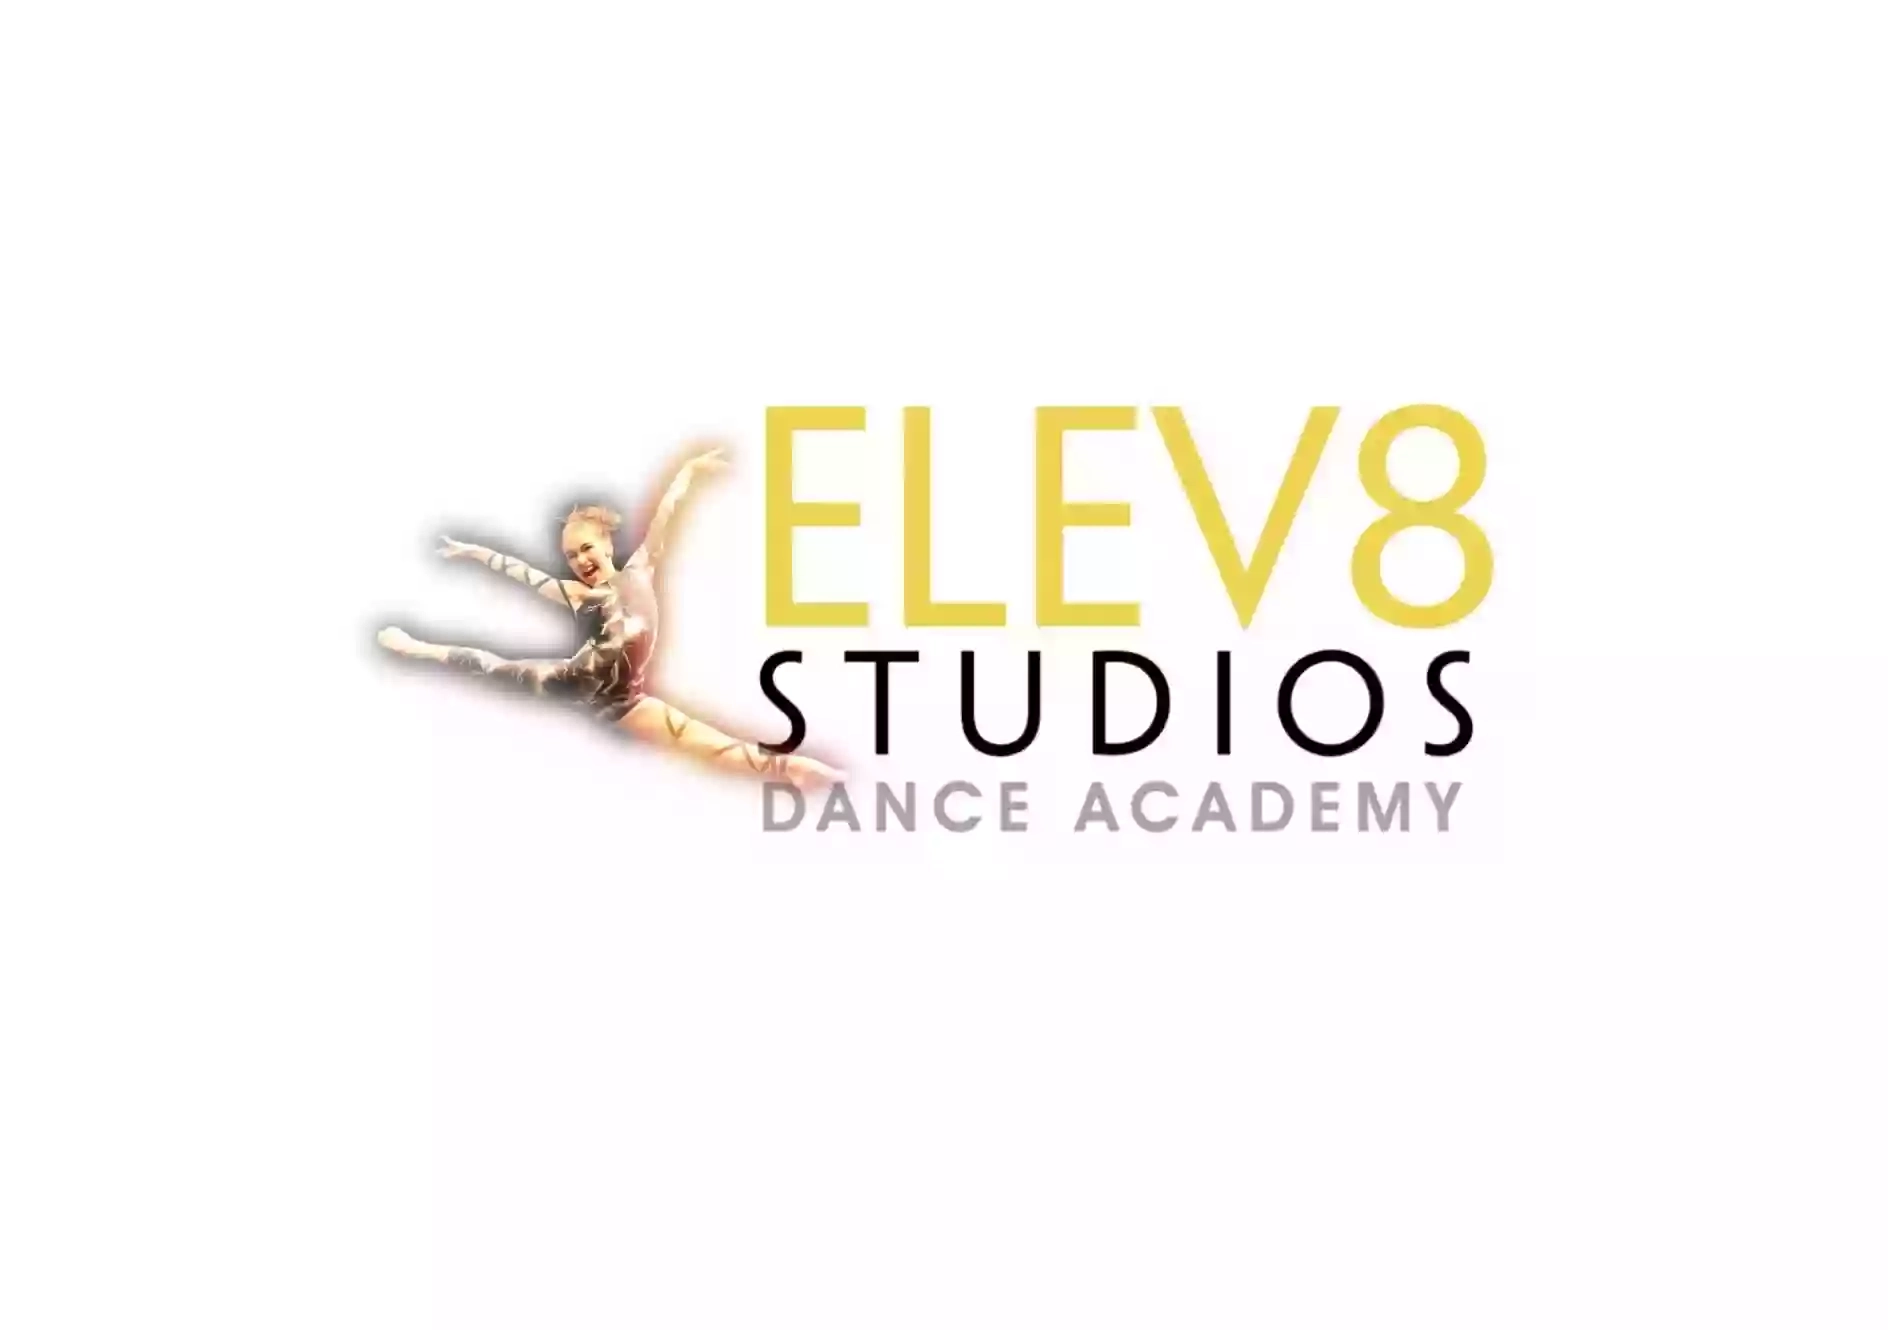 ELEV8 STUDIOS DANCE ACADEMY